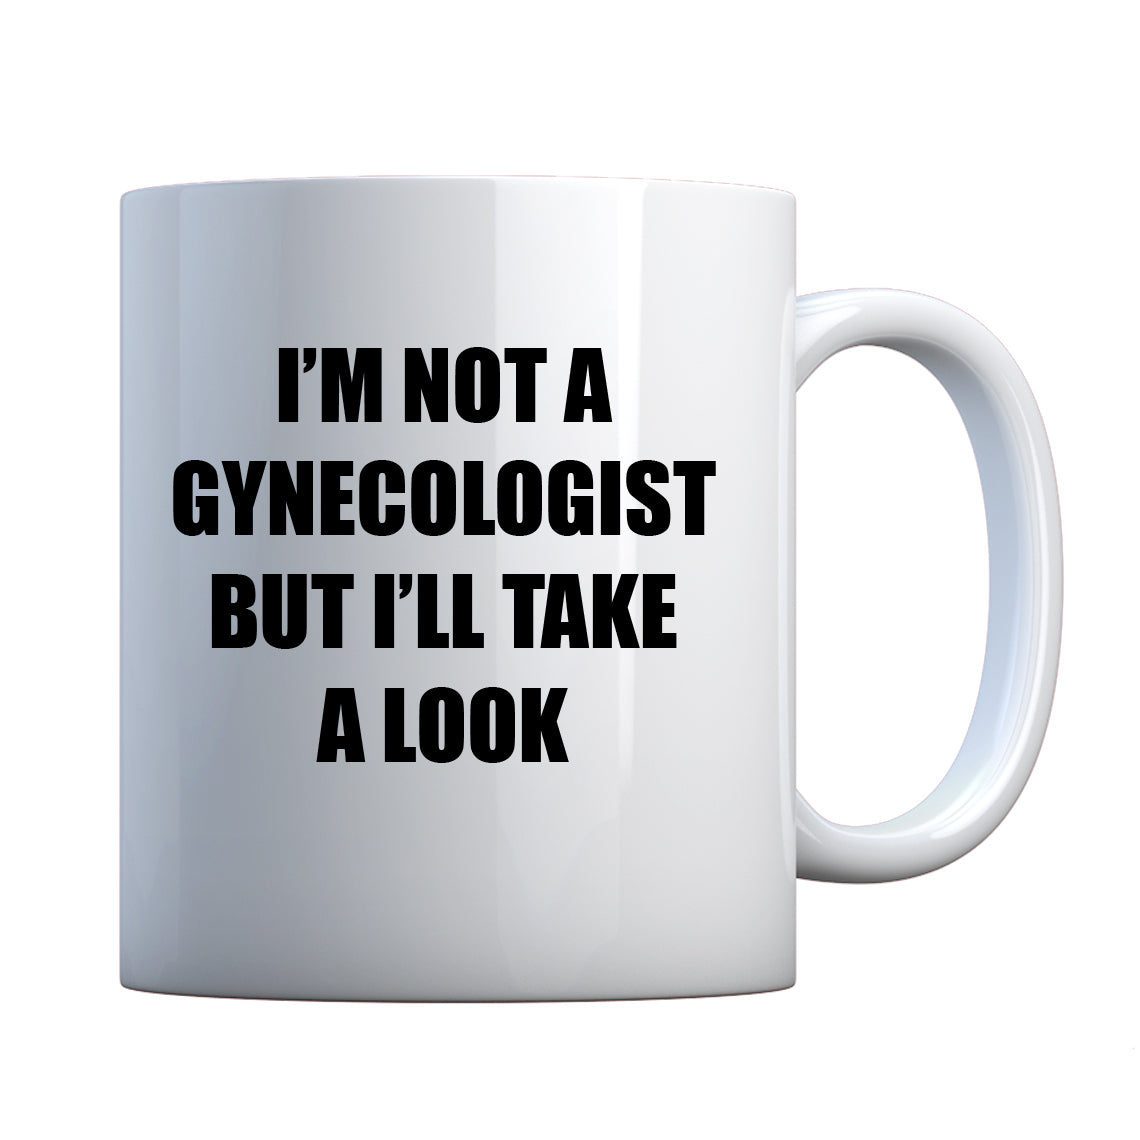 I'm not a Gynecologist Ceramic Gift Mug